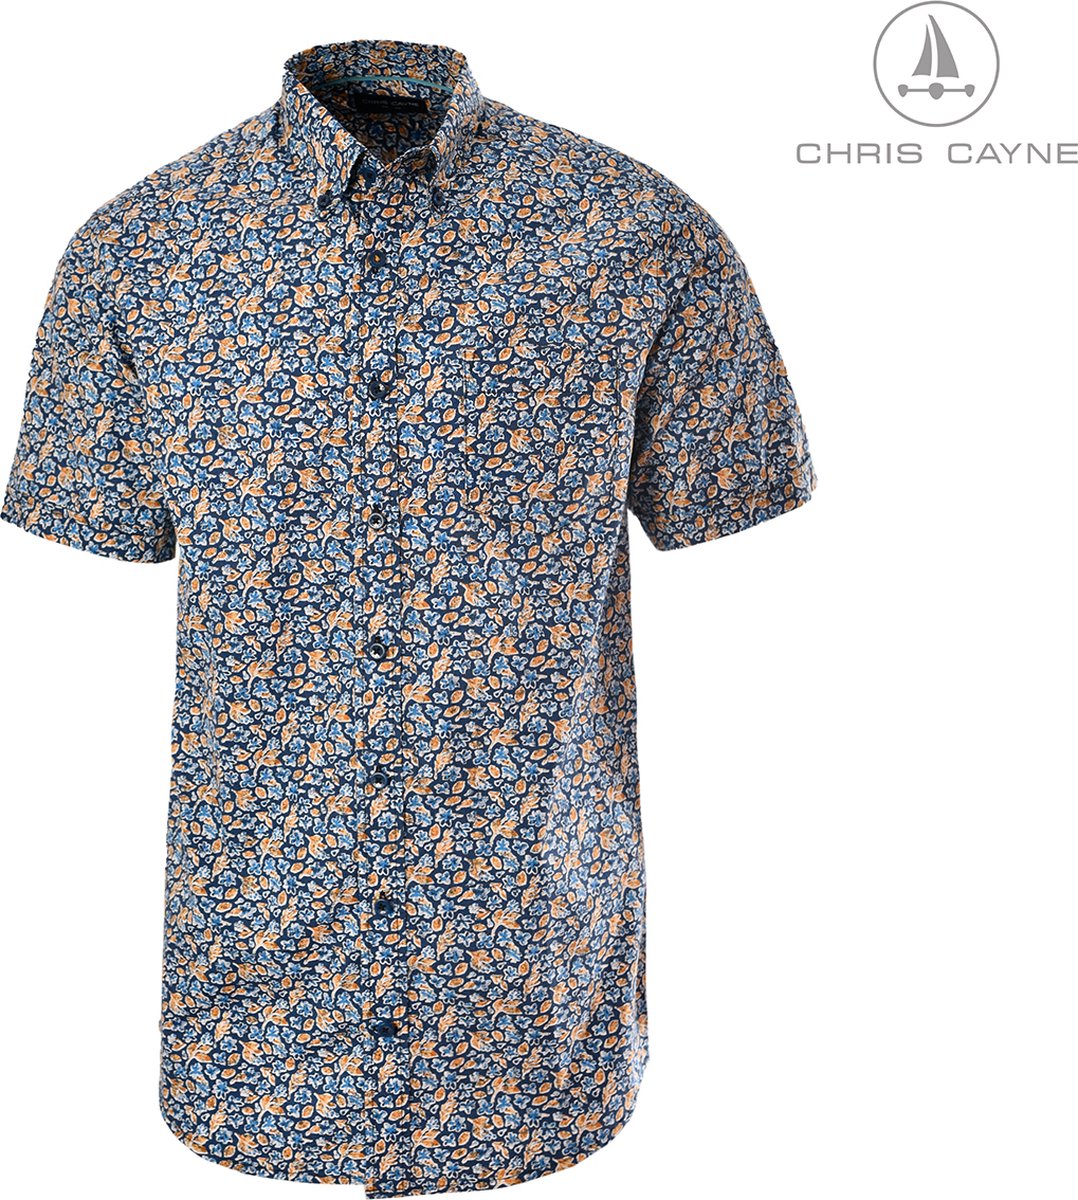 Chris Cayne heren blouse - overhemd 1996 blauw/oranje print - KM - maat XL